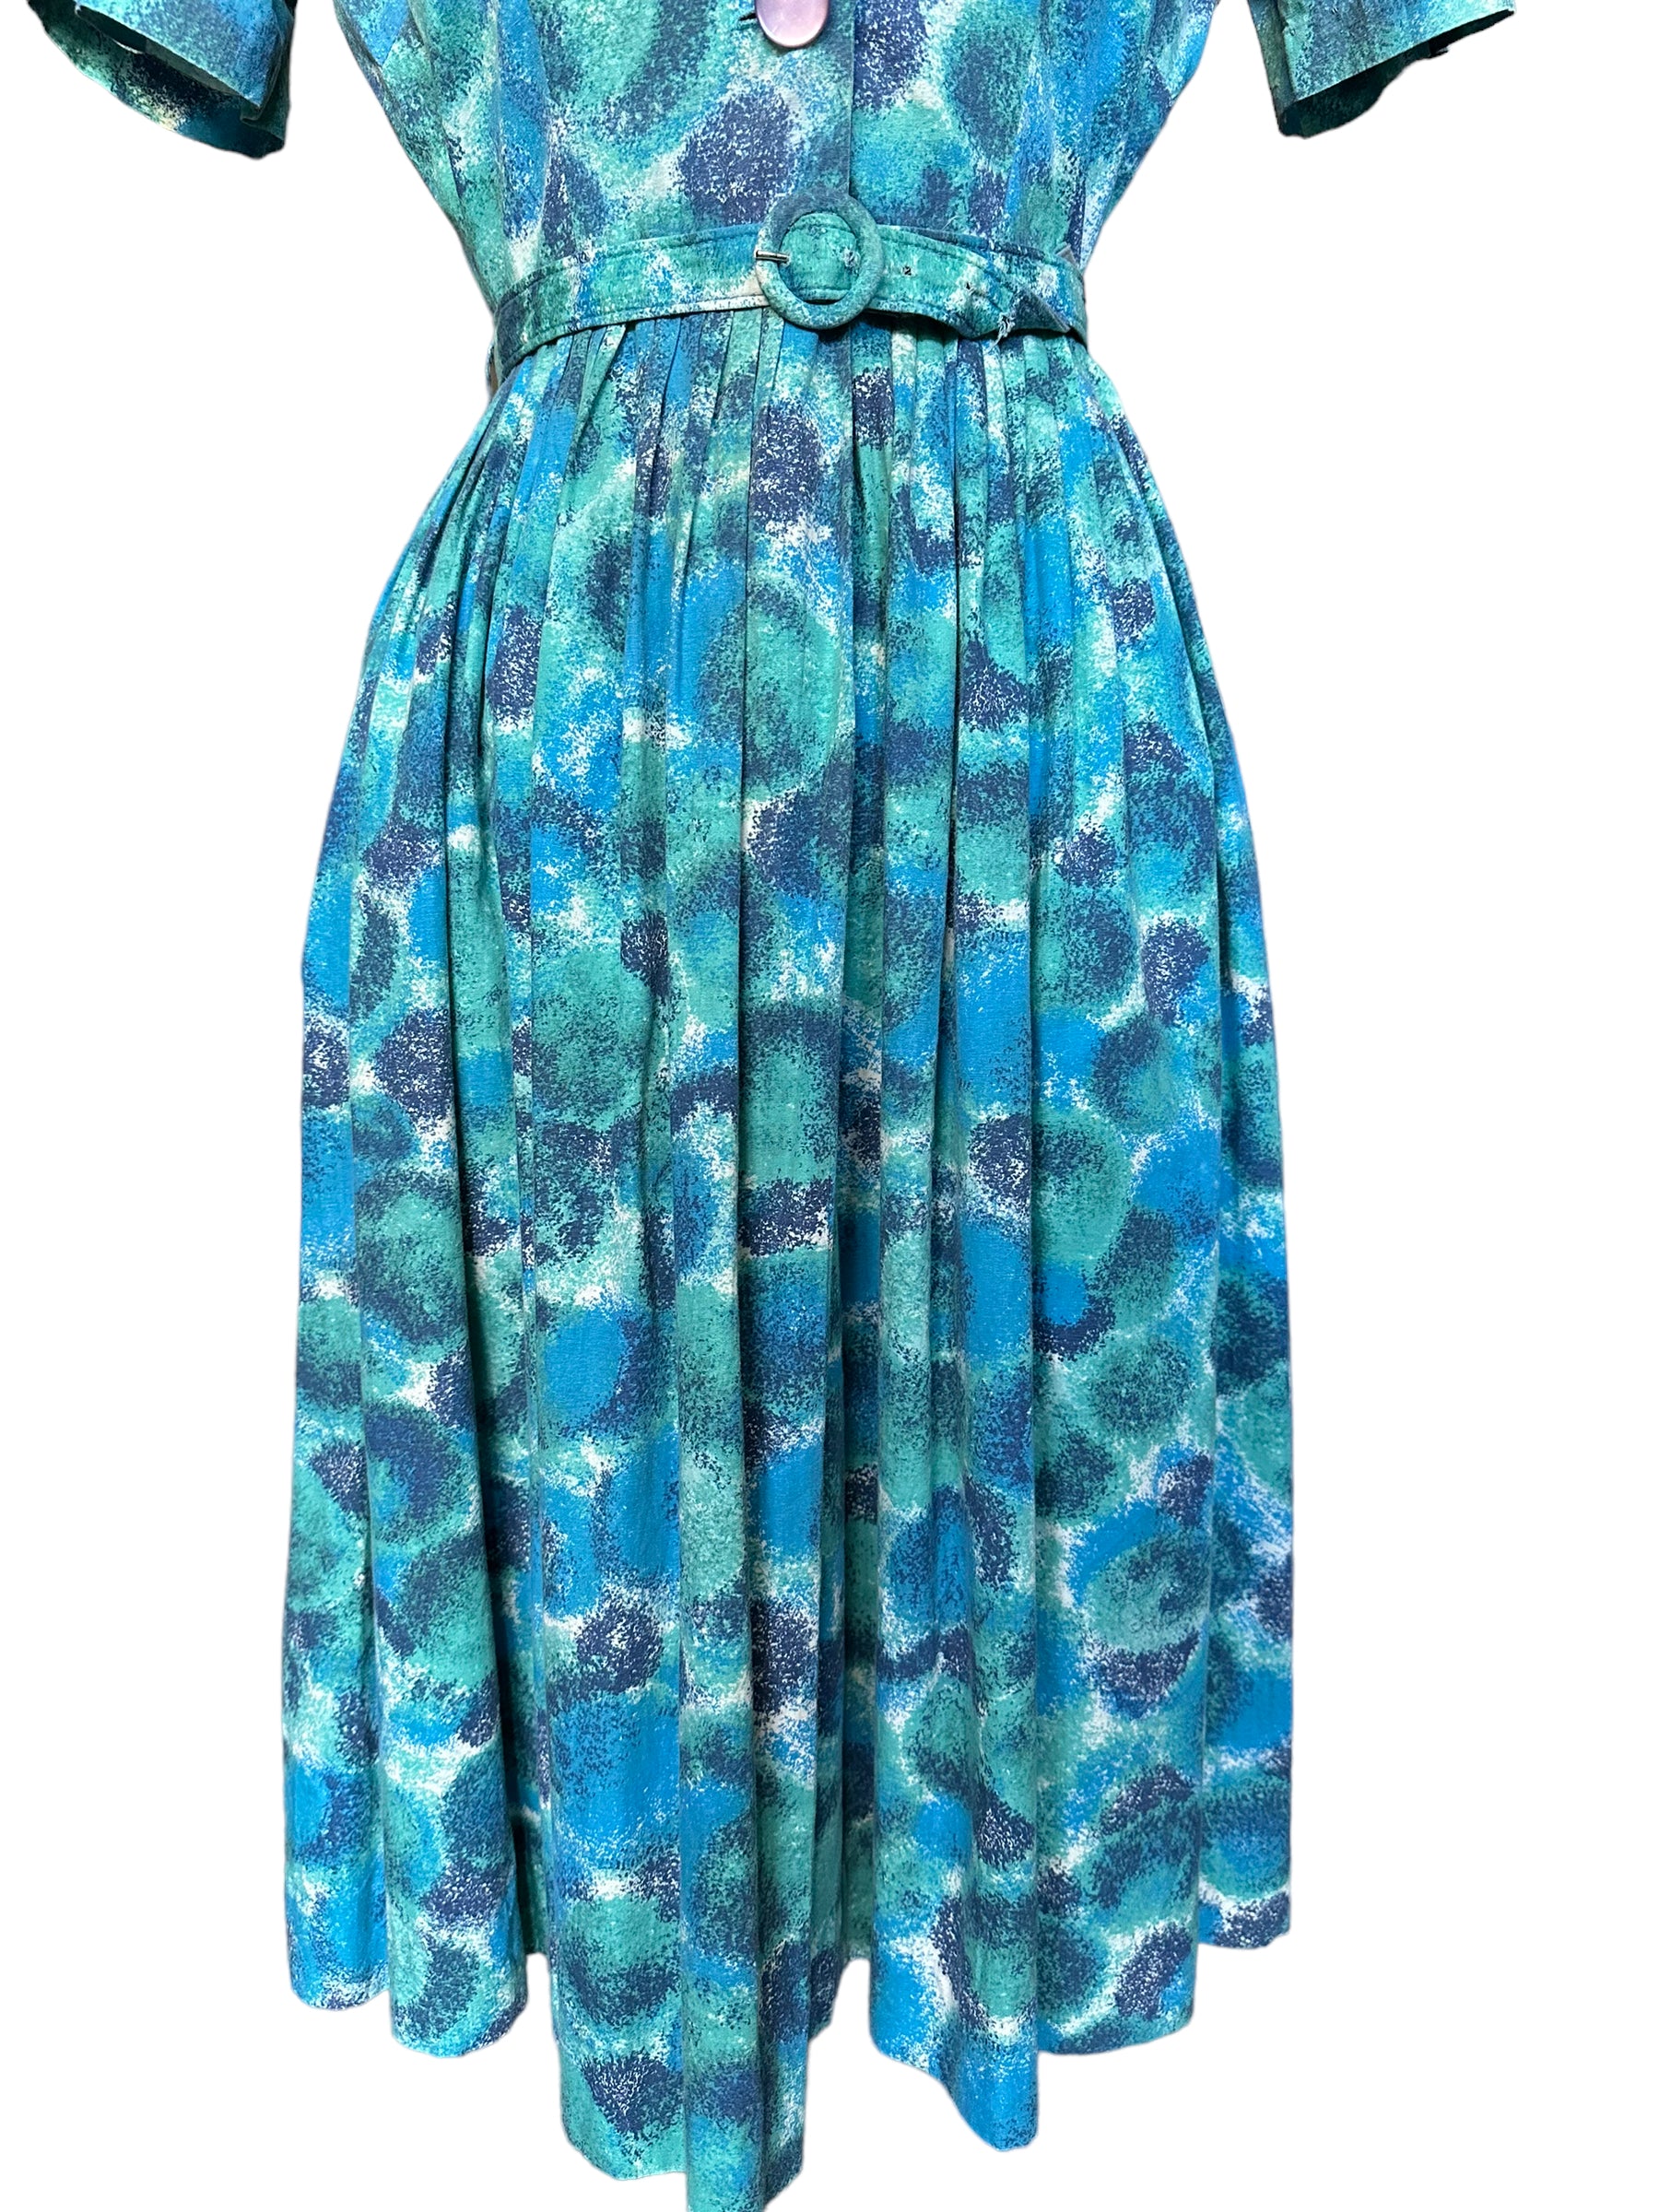 Front skirt view of Vintage 1950s Button Up Dress With Belt | True Vintage Dresses | Barn Owl Vintage Seattle